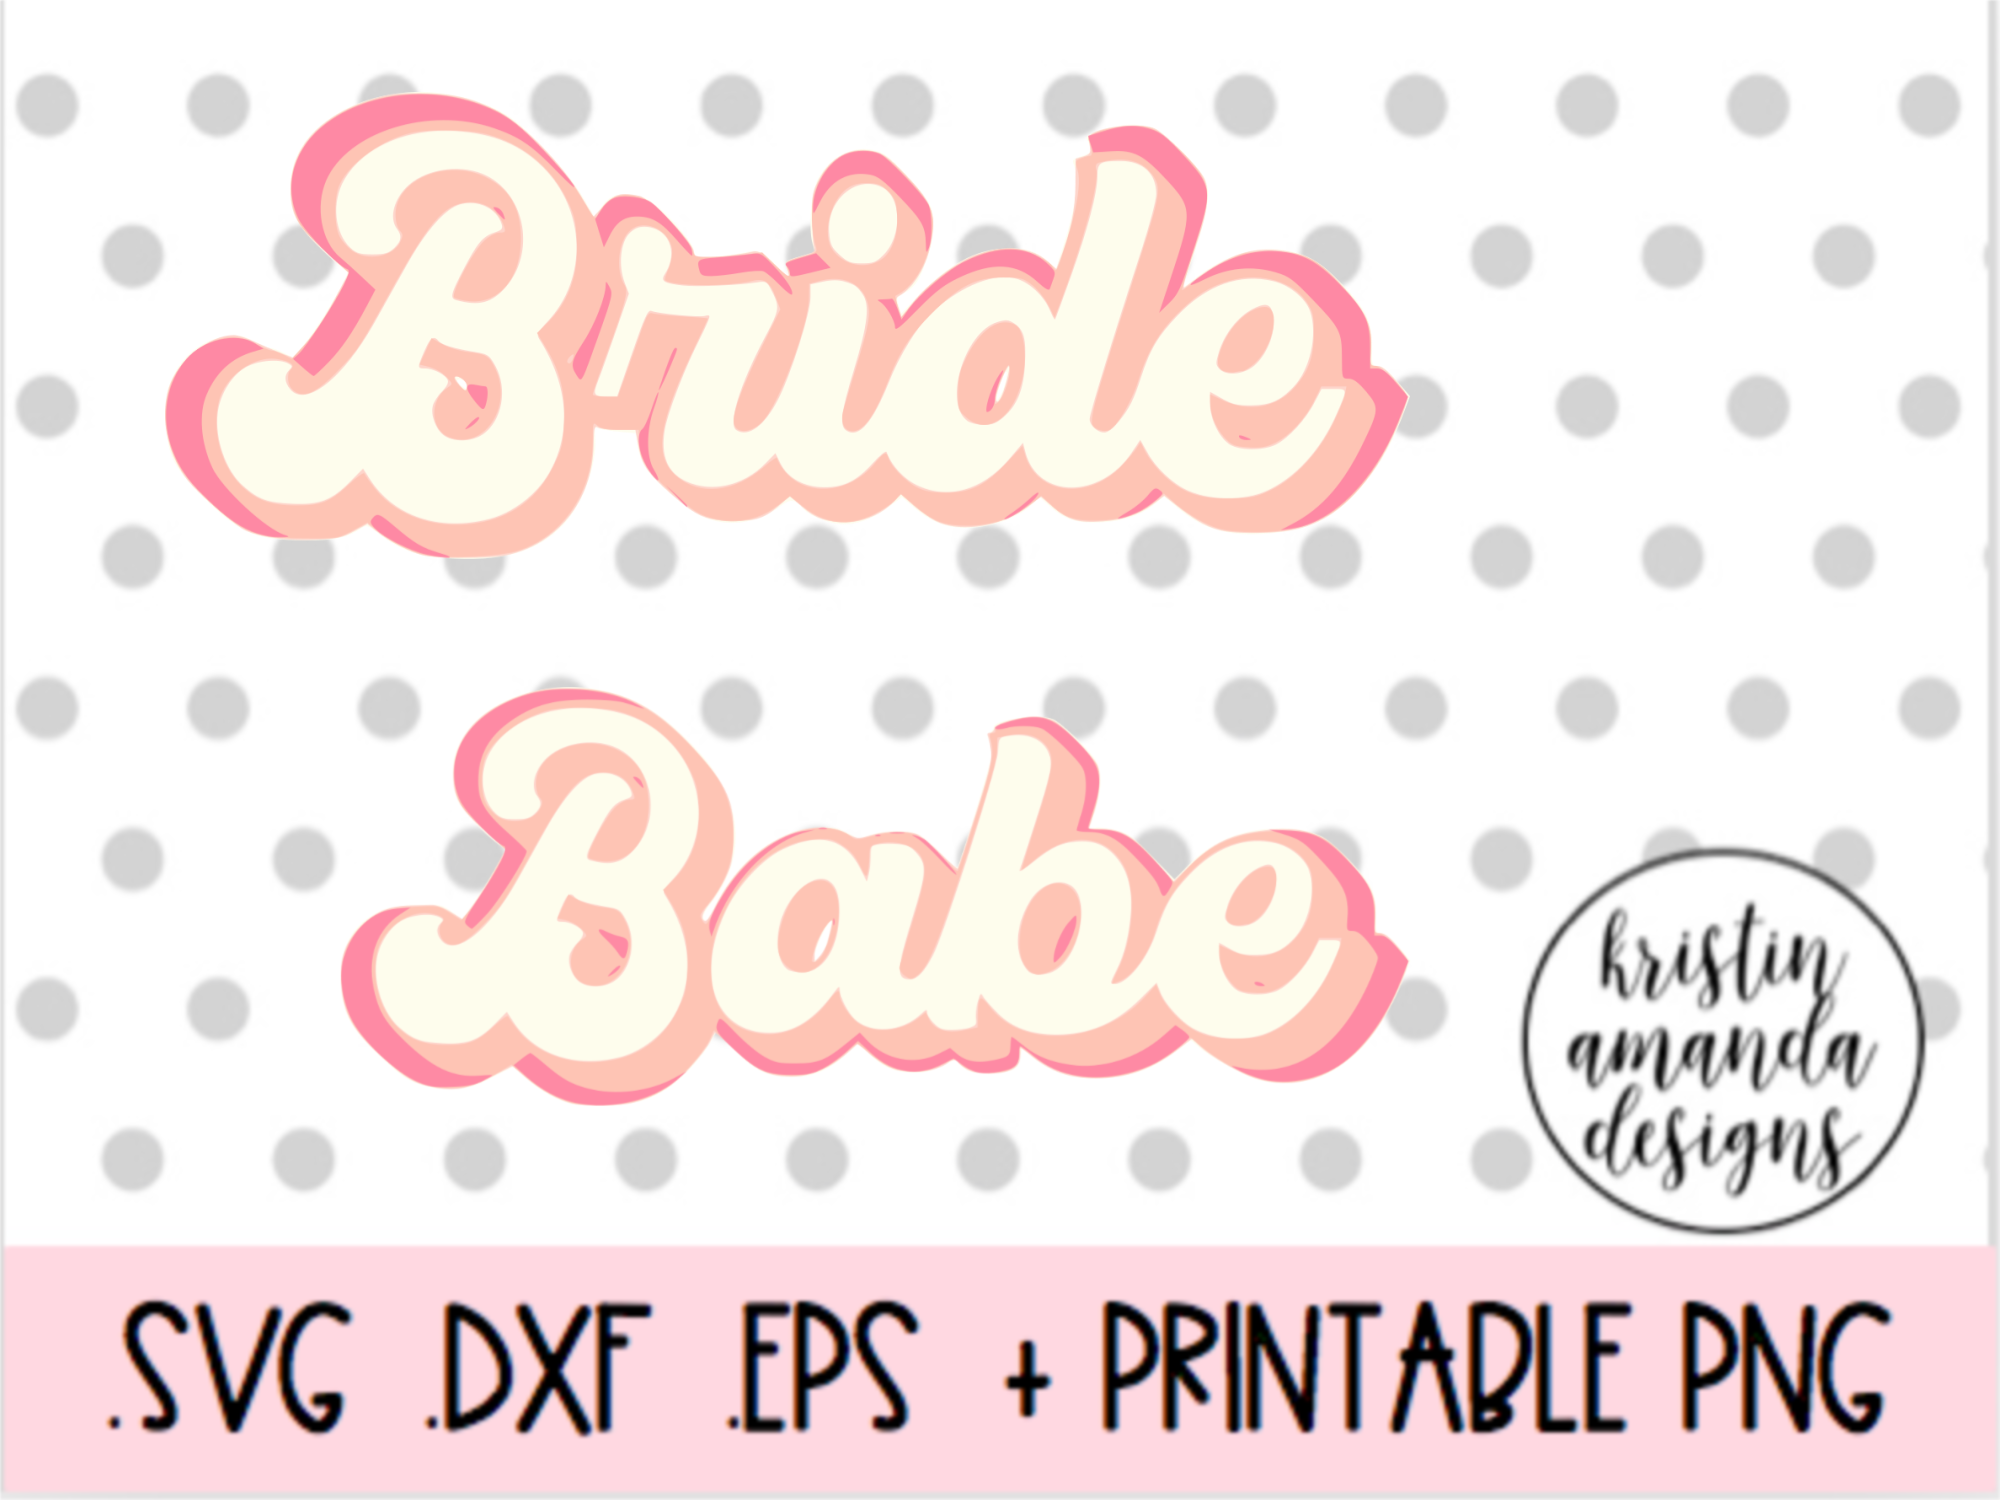 Download Bride Babe Retro 70s Layered Wedding Svg Dxf Eps Png Cut File Cricut By Kristin Amanda Designs Svg Cut Files Thehungryjpeg Com